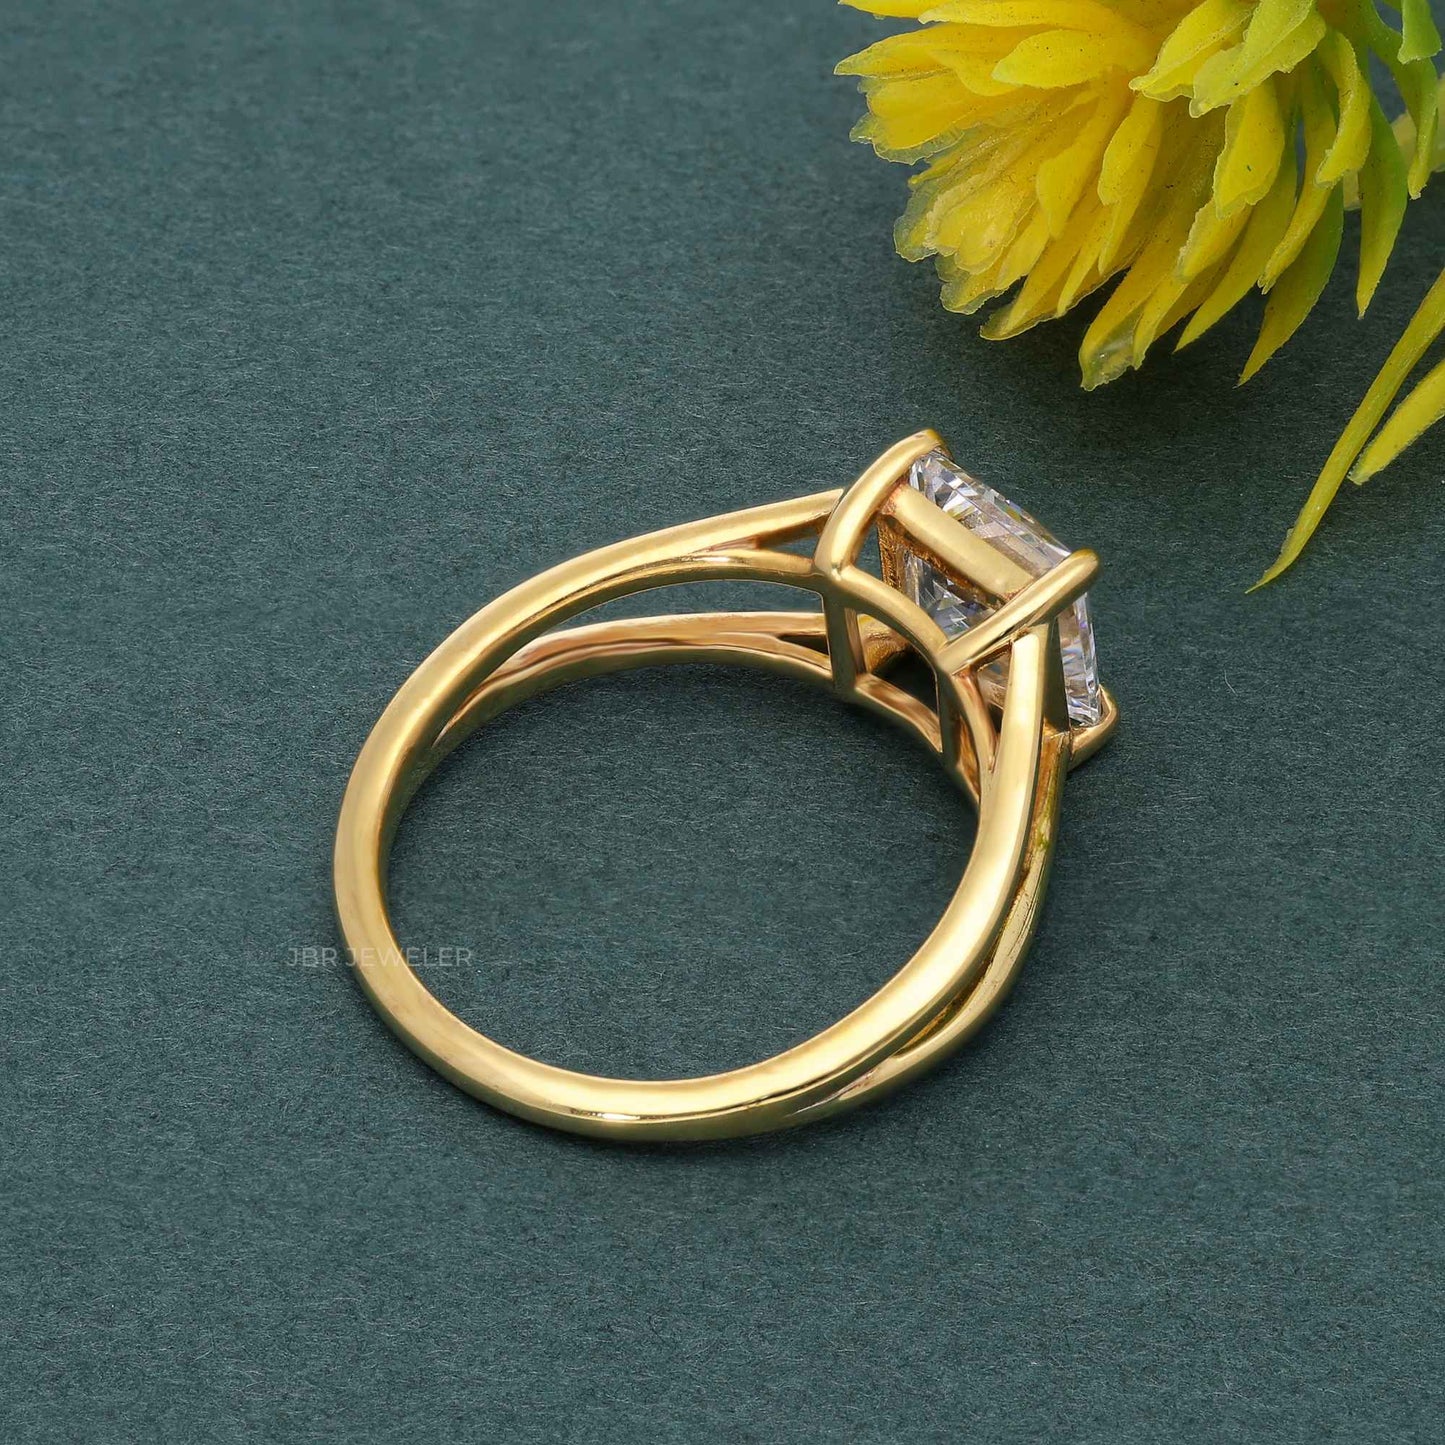 Split Shank Princess Cut Lab Grown Diamond Solitaire Ring